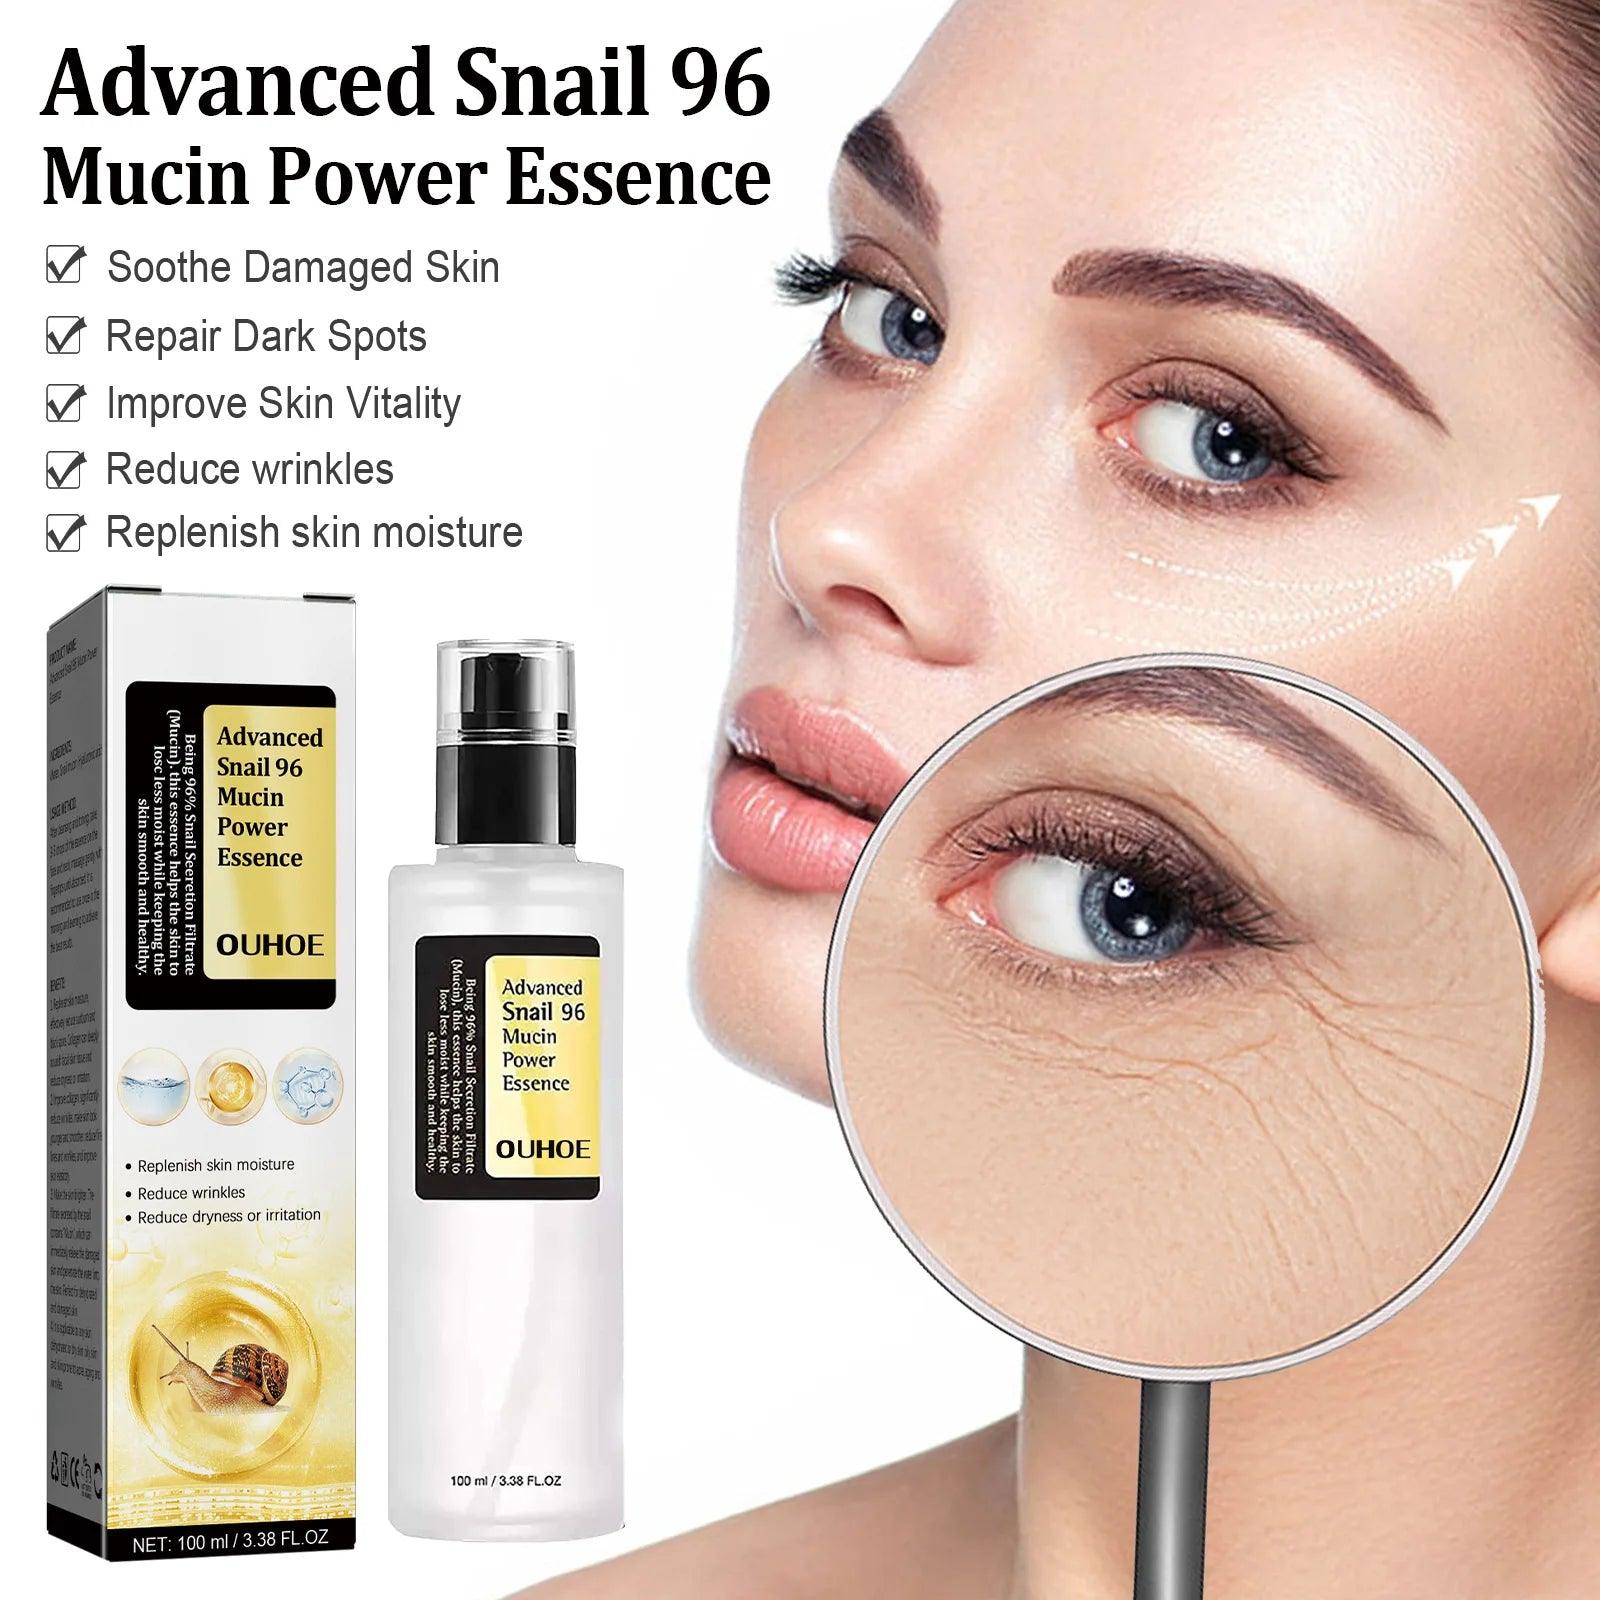 Snail Secretion Filtrate Anti-Aging Essence Serum for Skin Rejuvenation  ourlum.com   